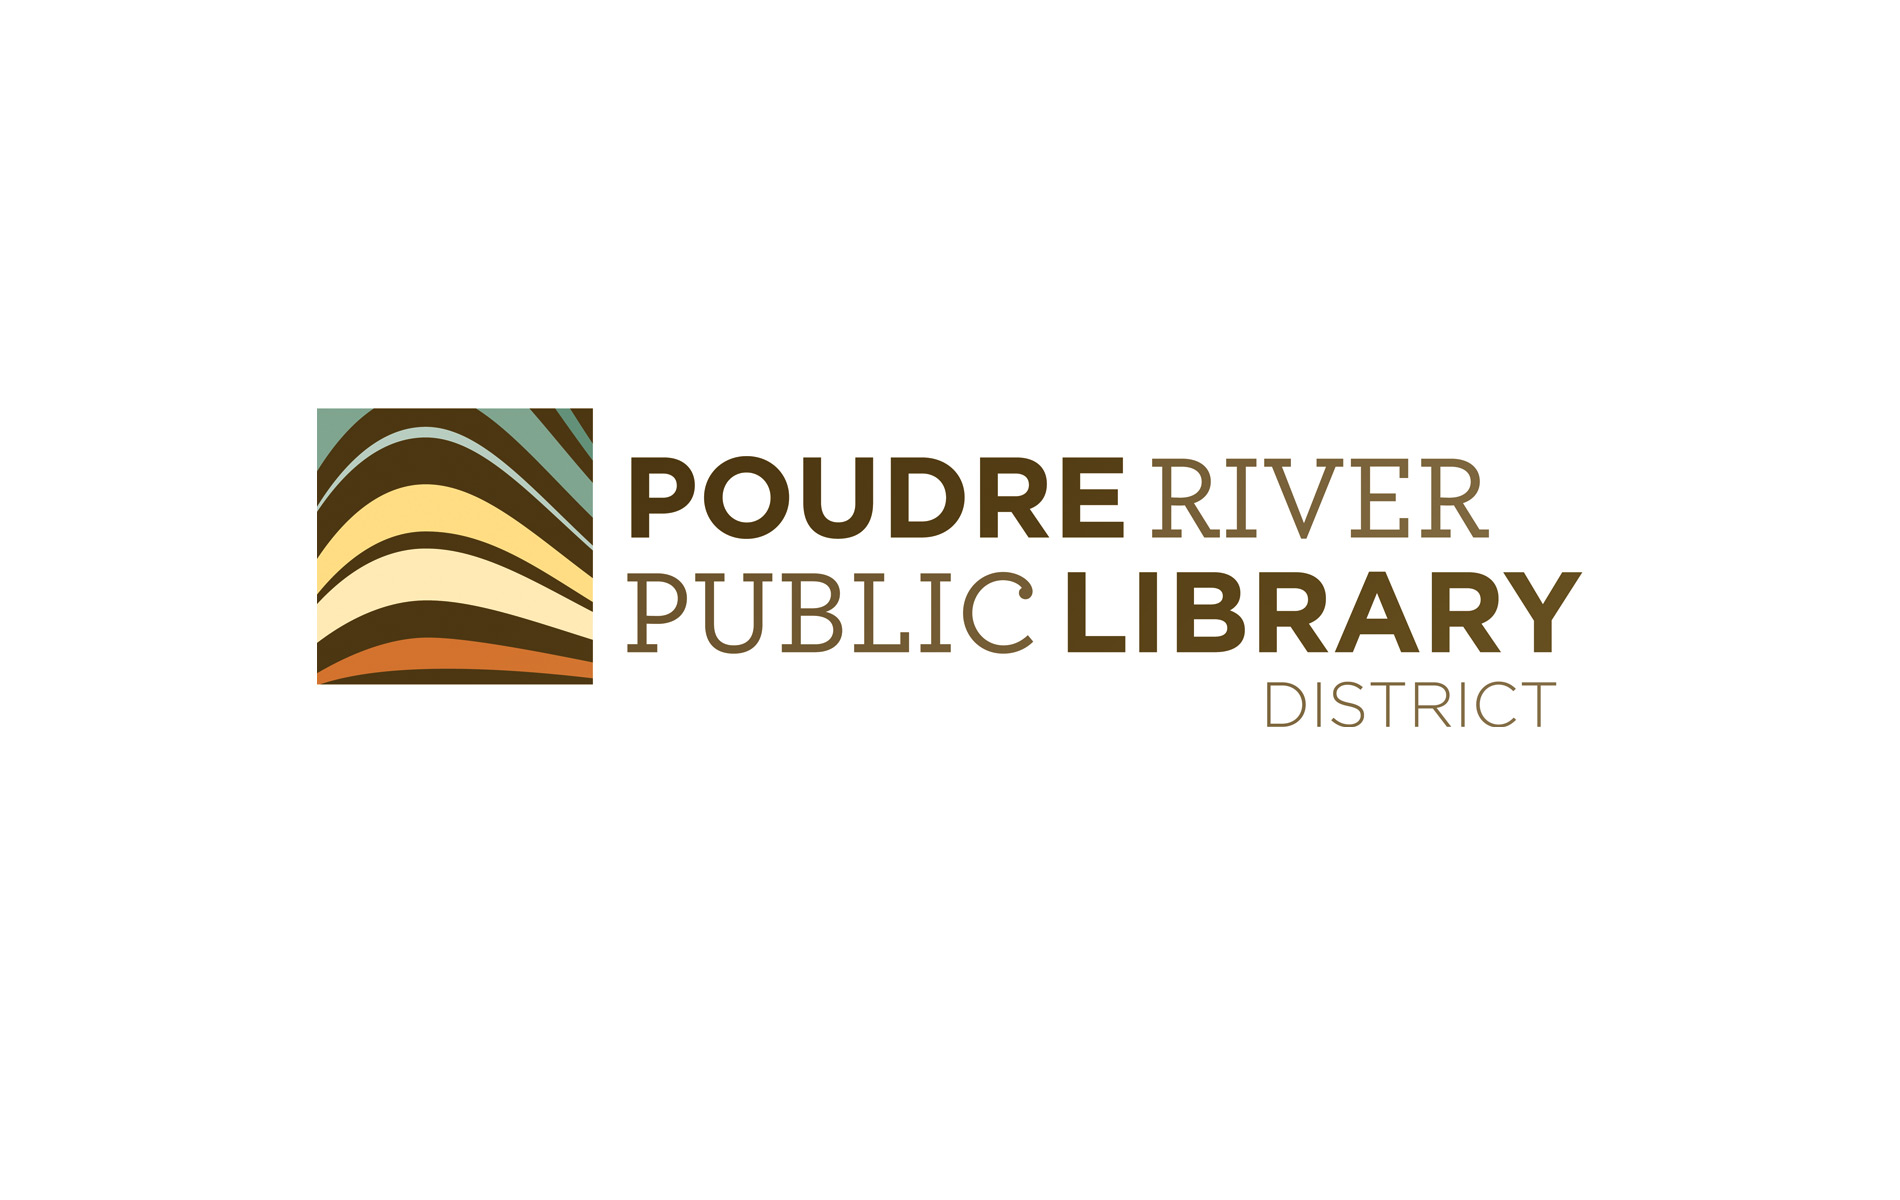 Poudre_River_Public_Library_District_Logo_Toolbox_Creative_tagline by becky jensen.jpg